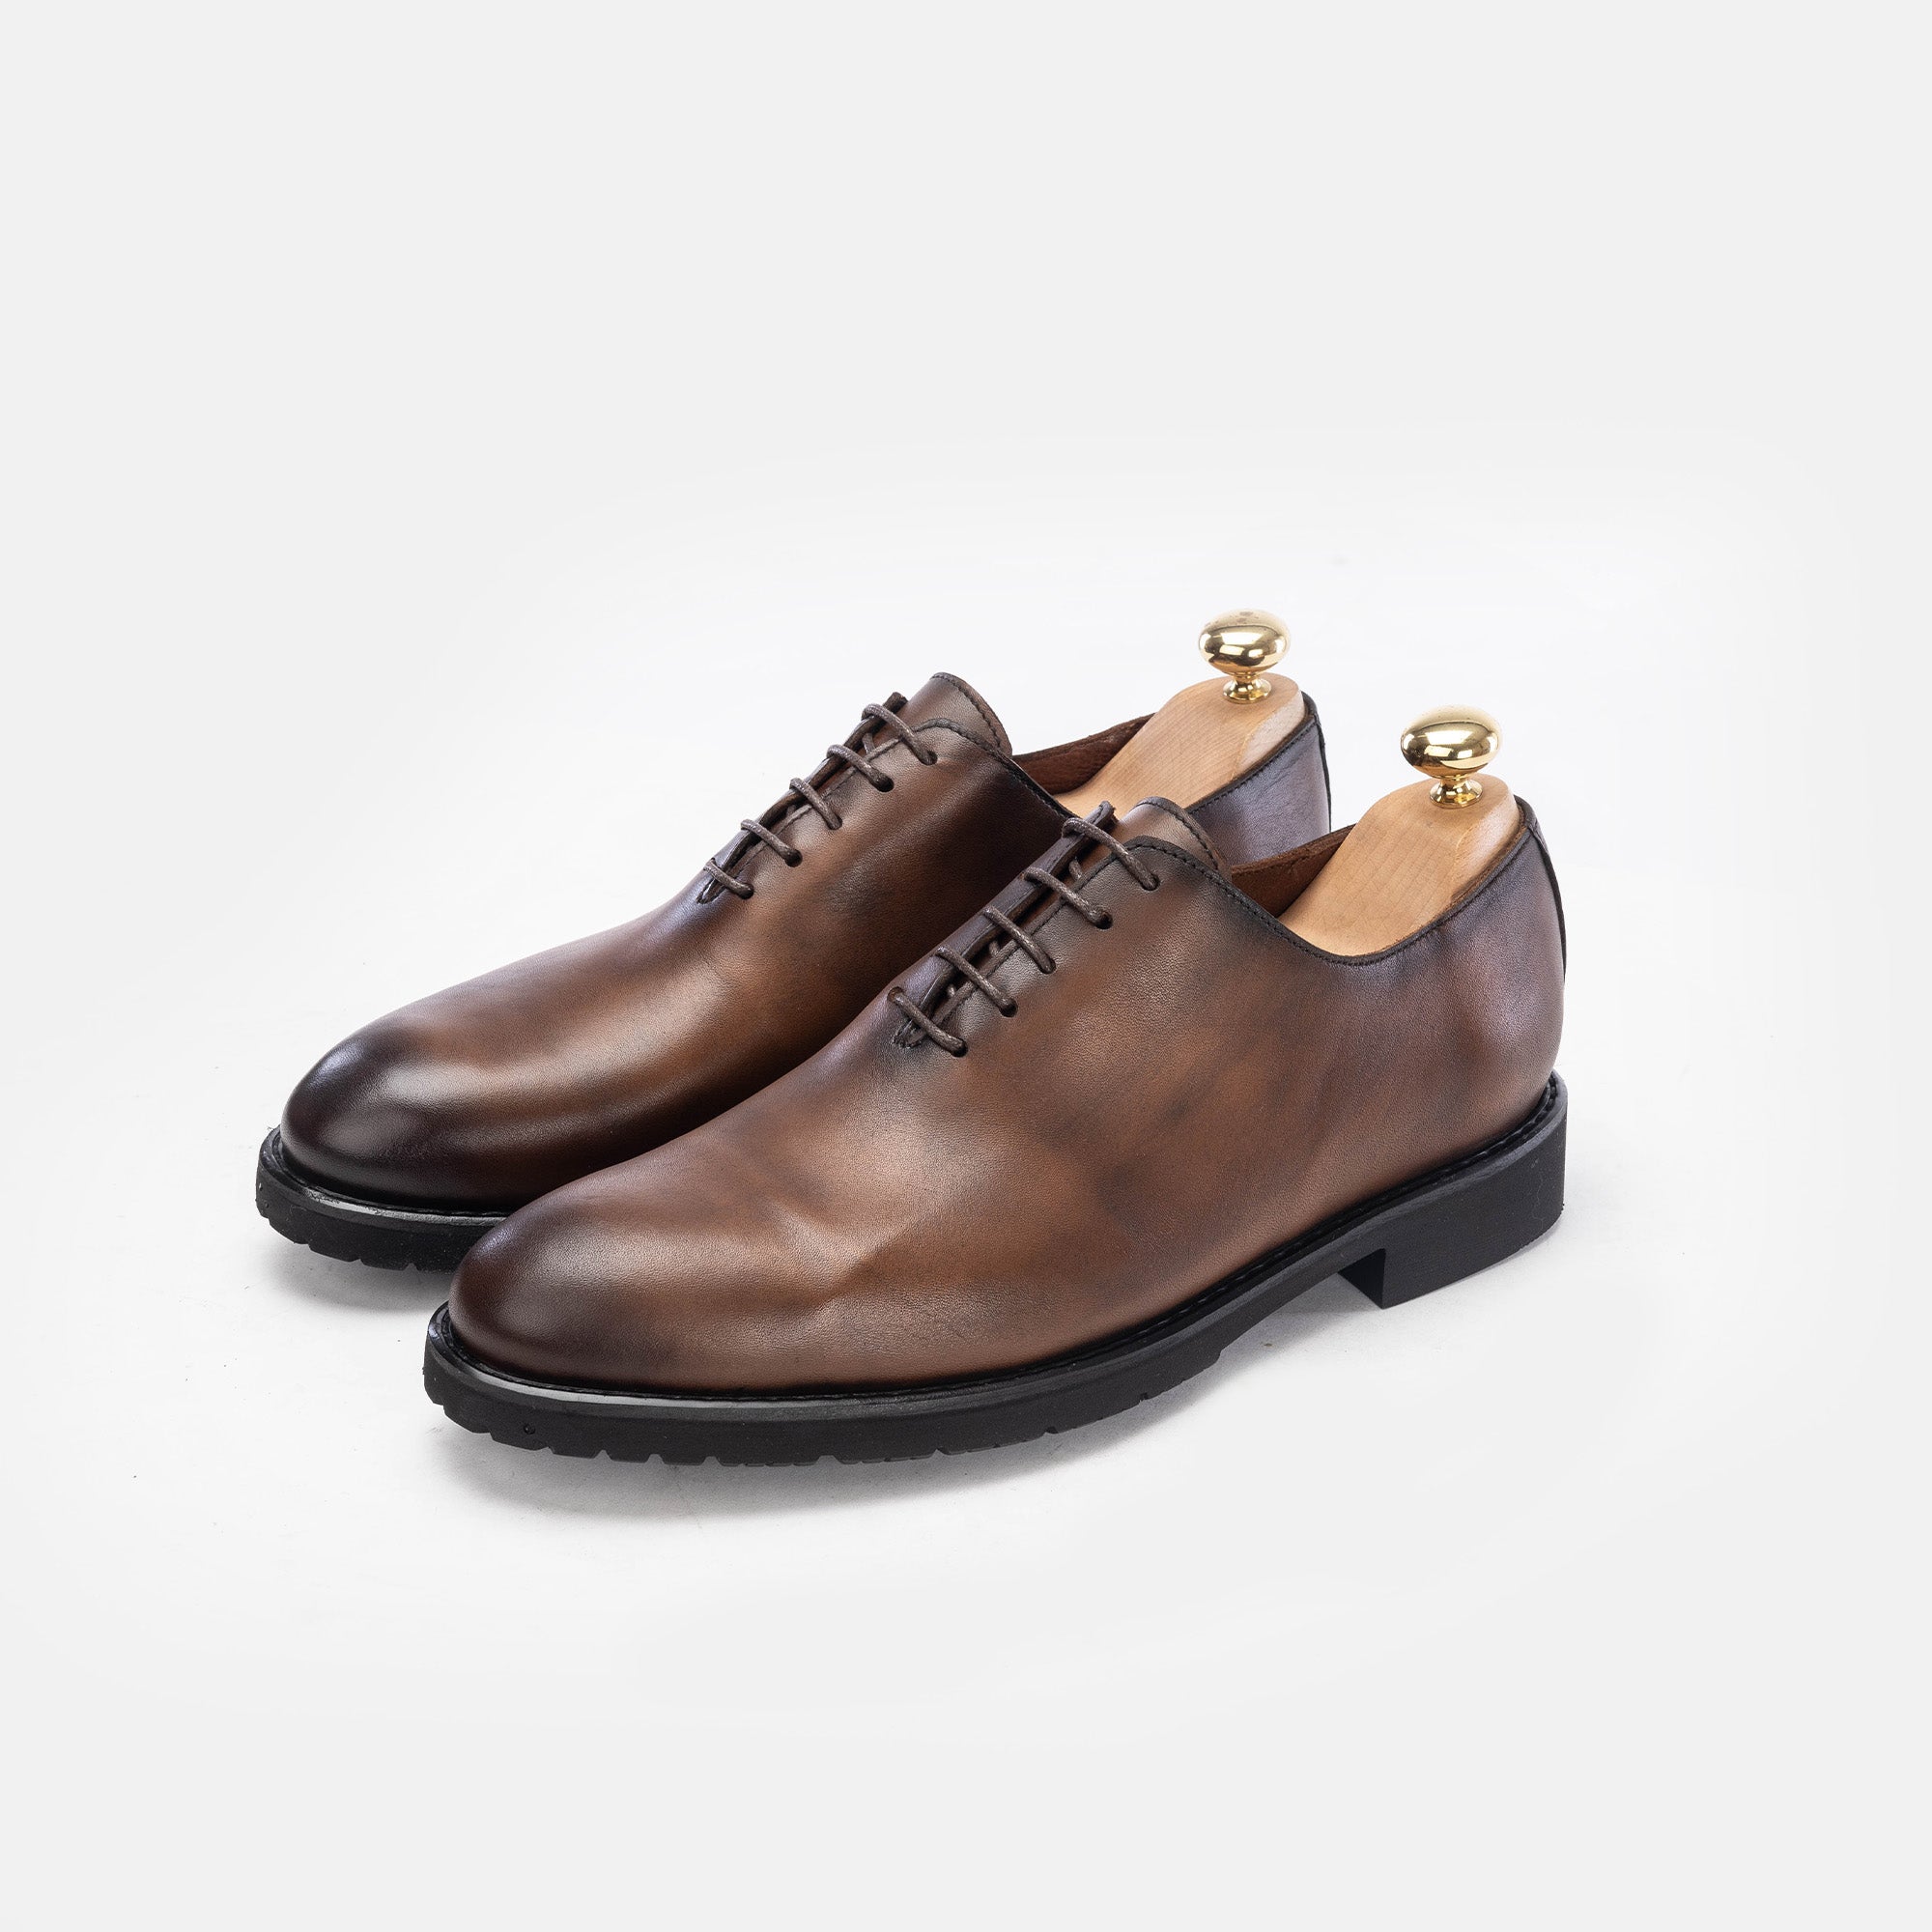 '''5161 chaussure cuir marron vintage